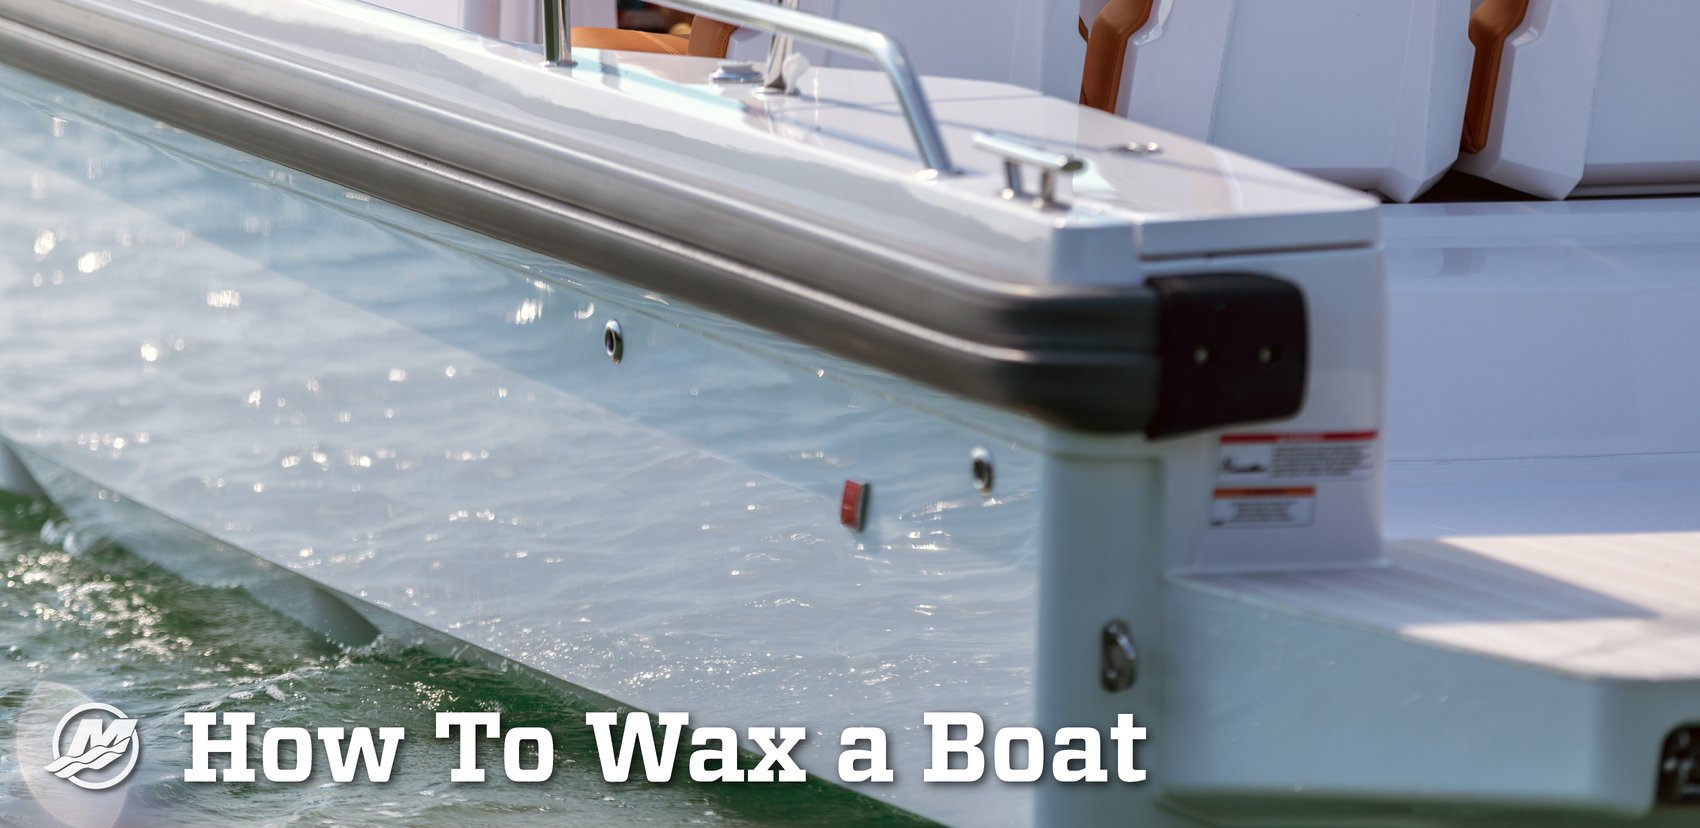 Waxing a Boat